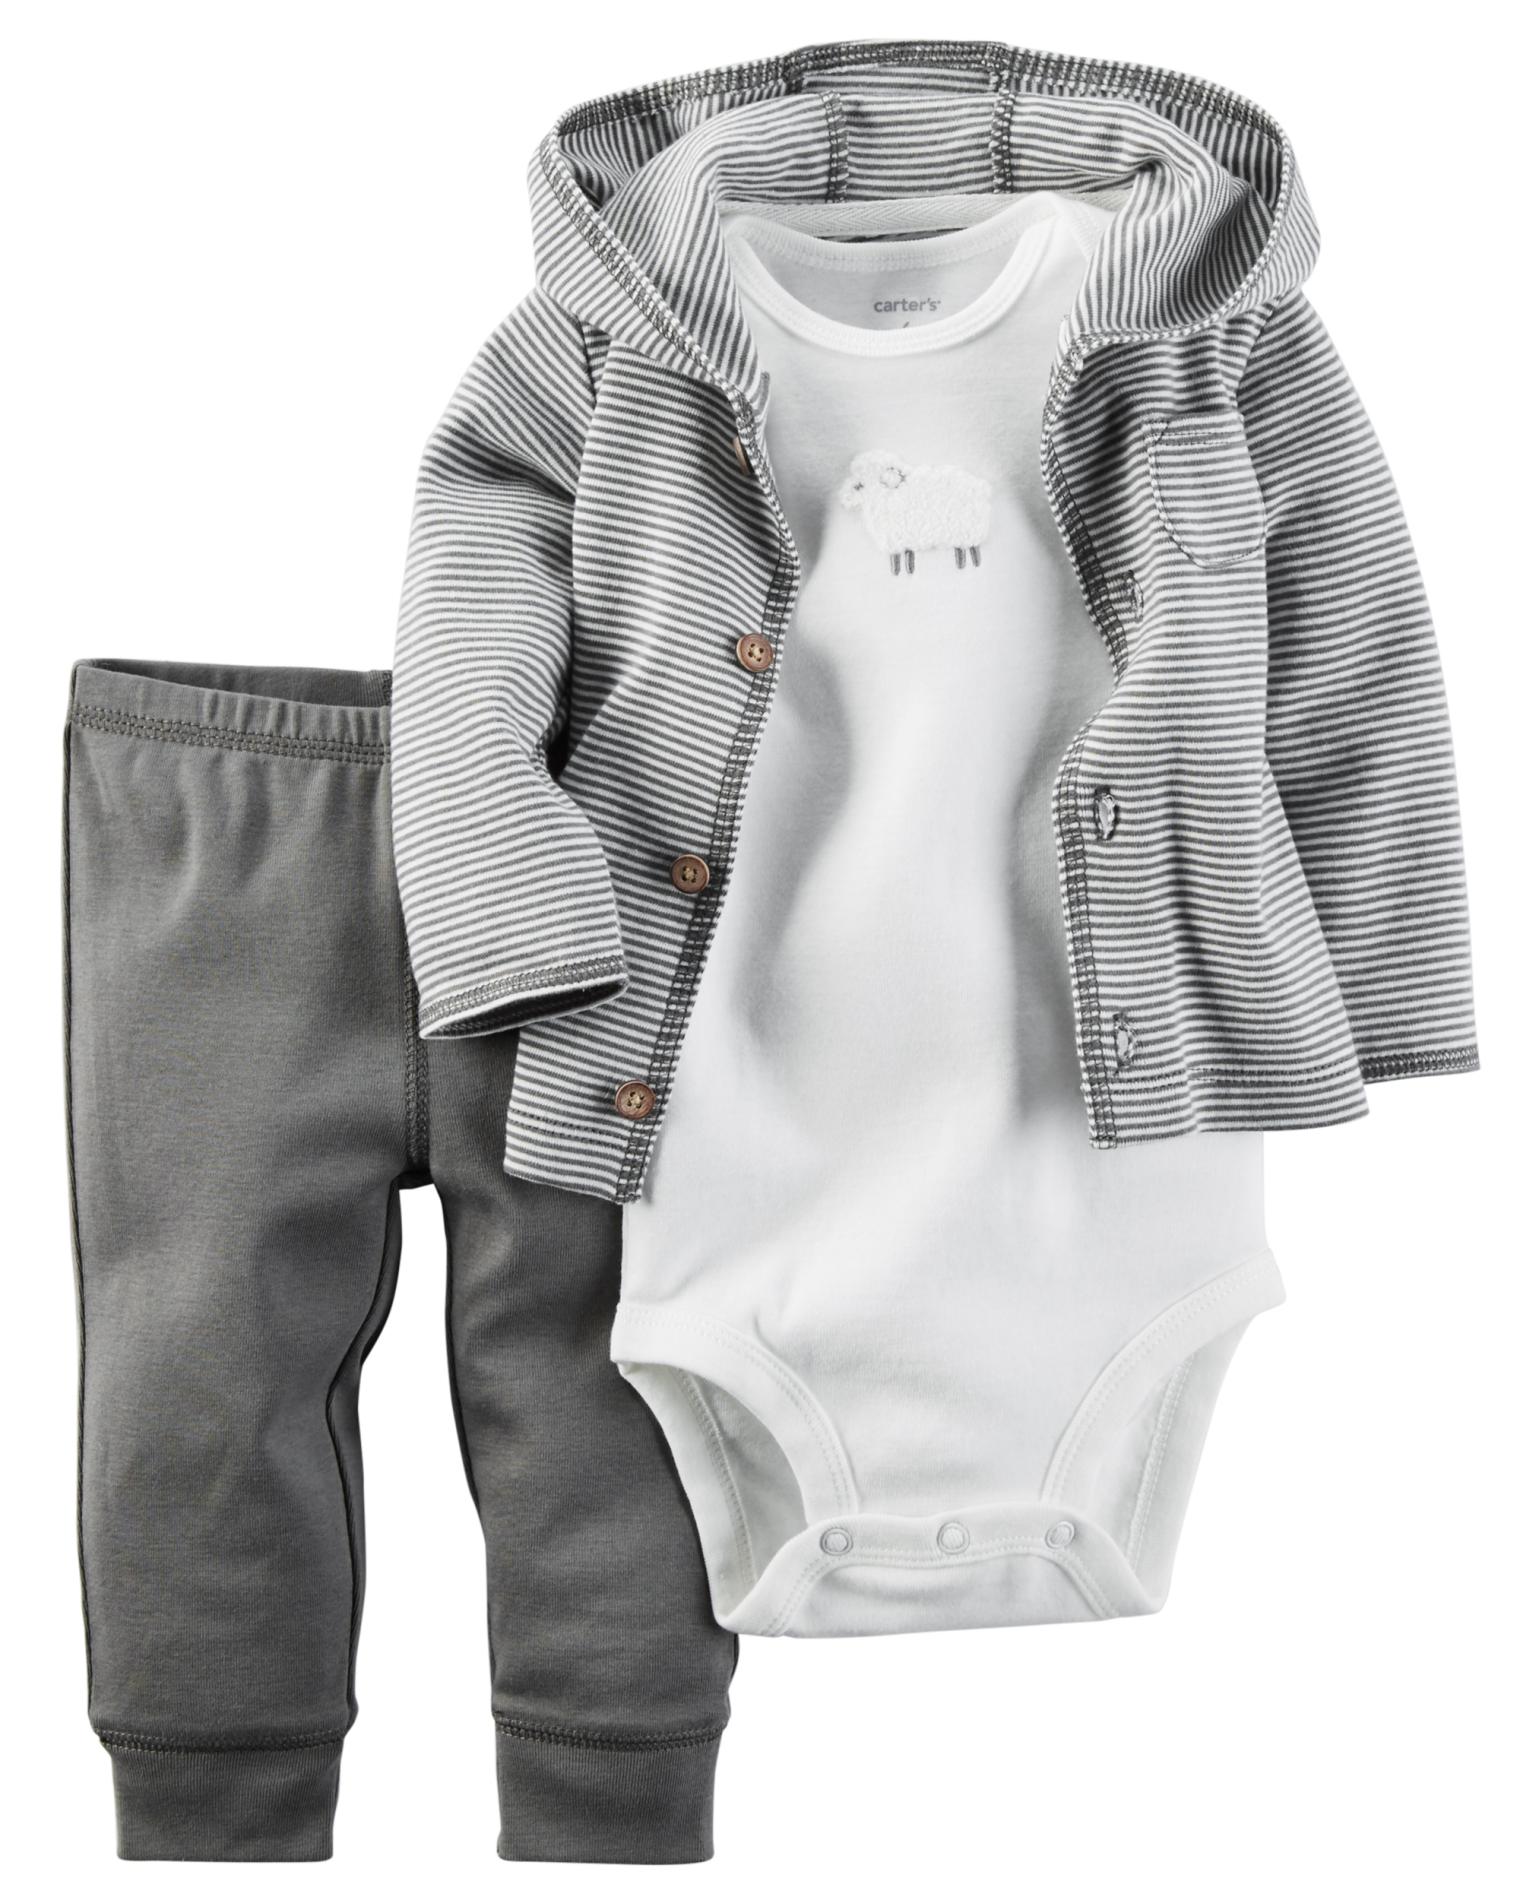 Carter's Newborn & Infants' Hooded Cardigan, Bodysuit & Pants - Sheep & Striped